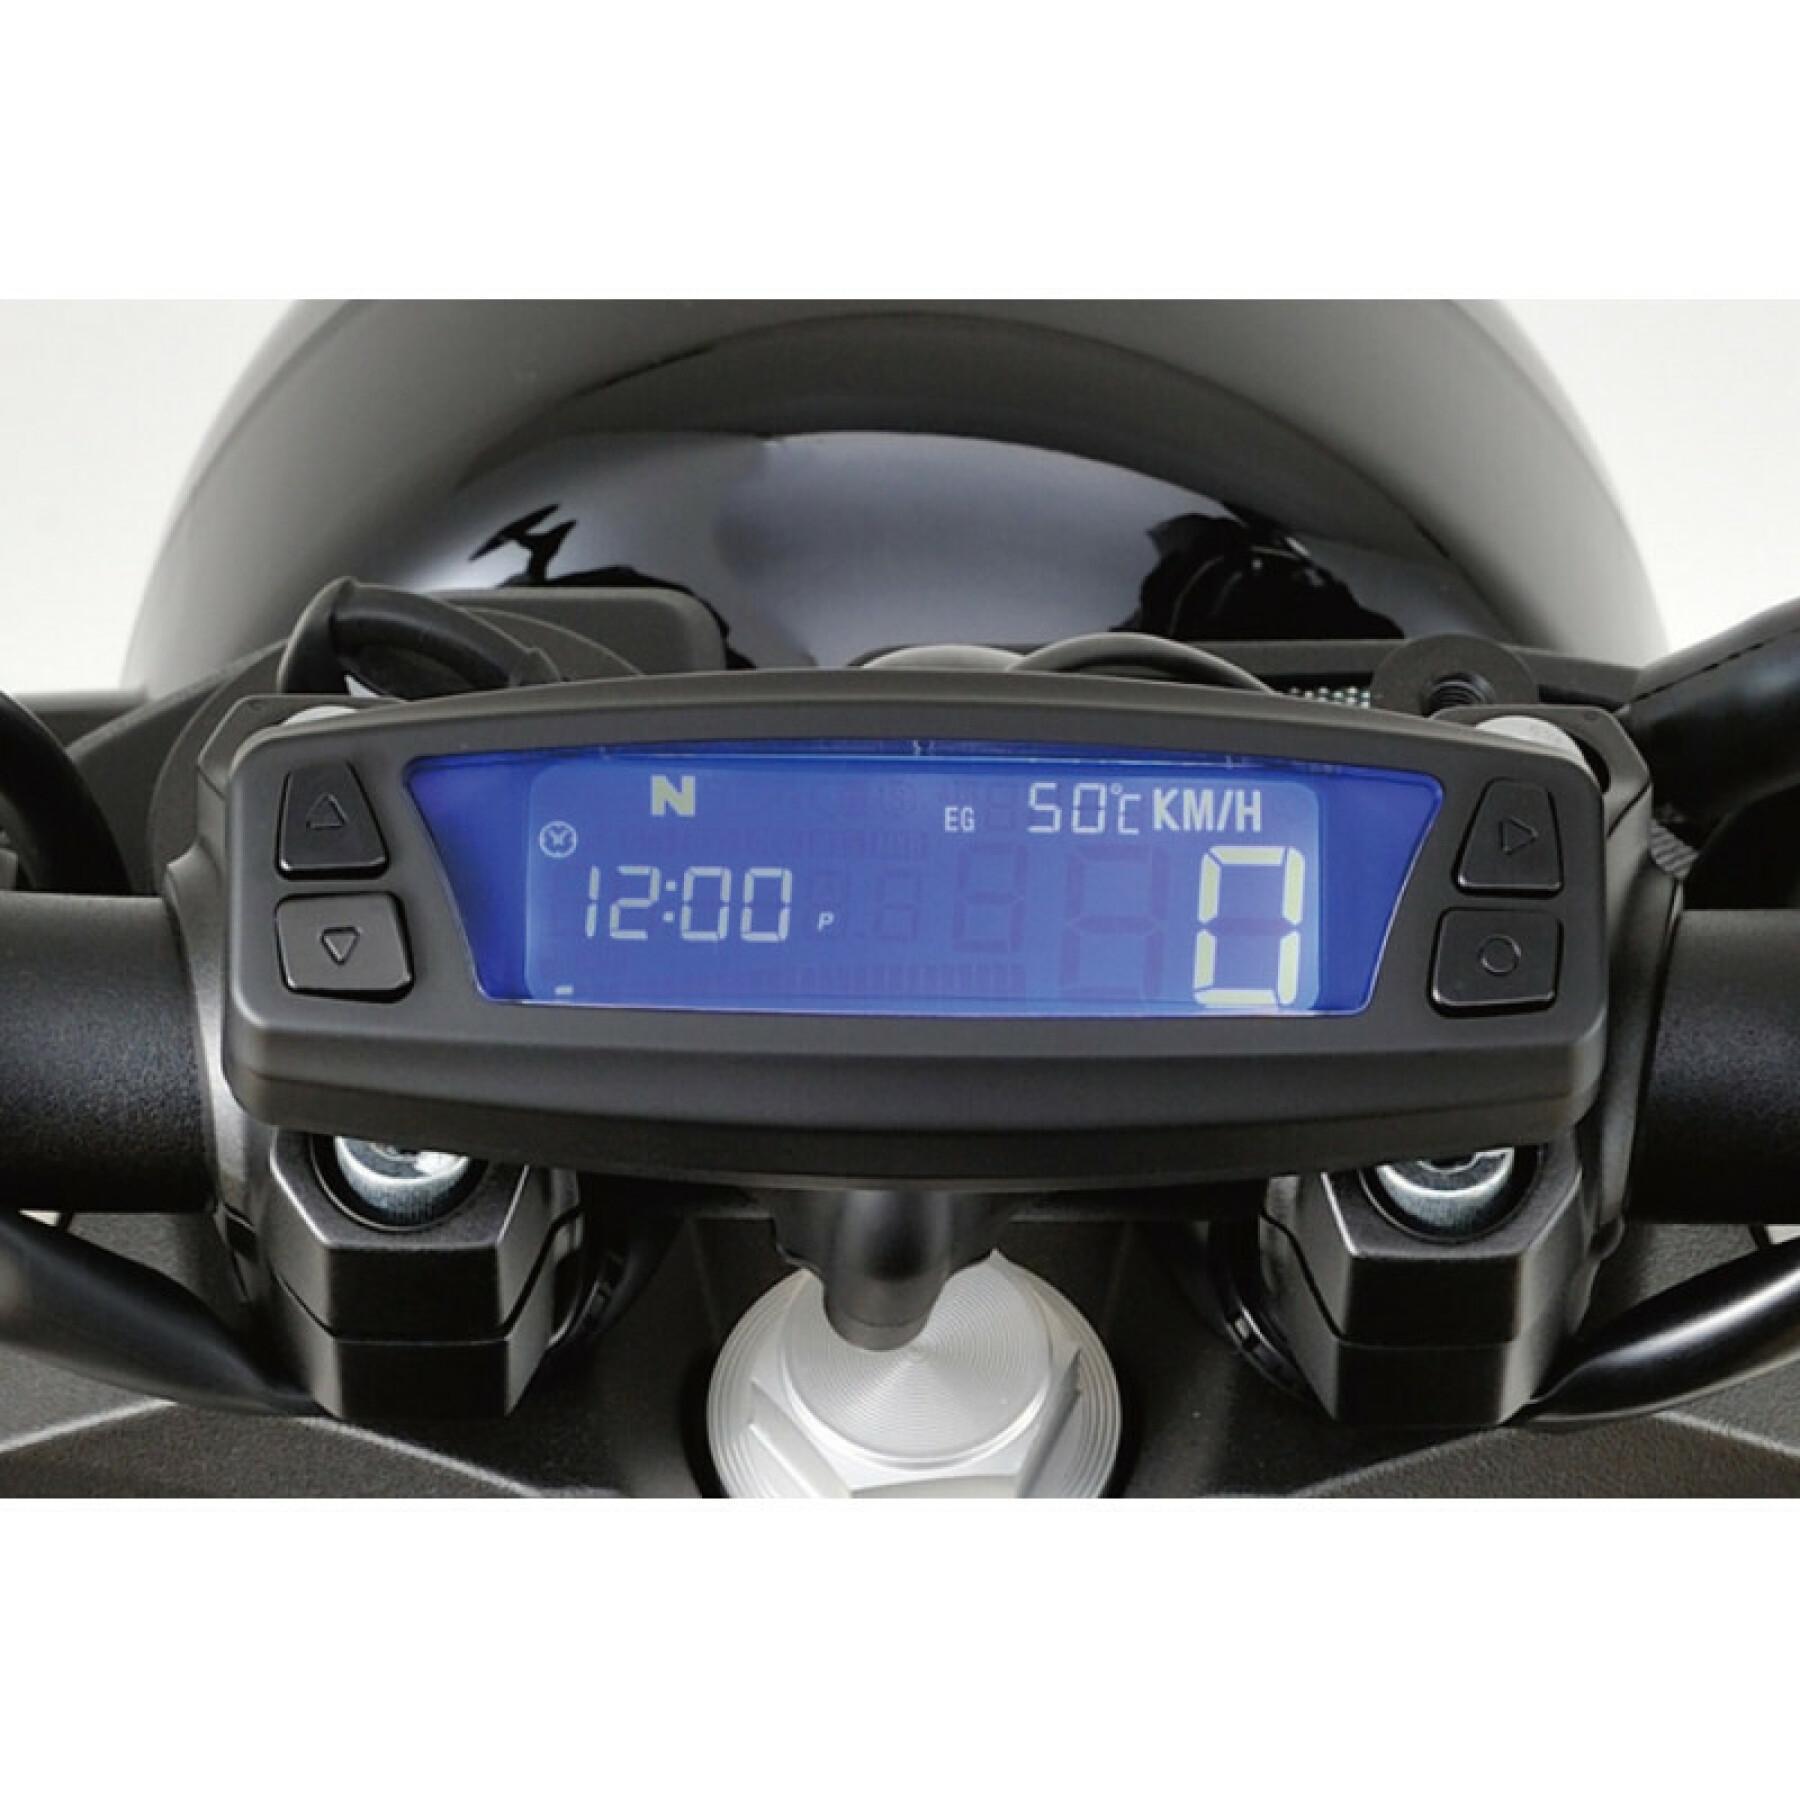 Misuratore digitale per moto Daytona Asura